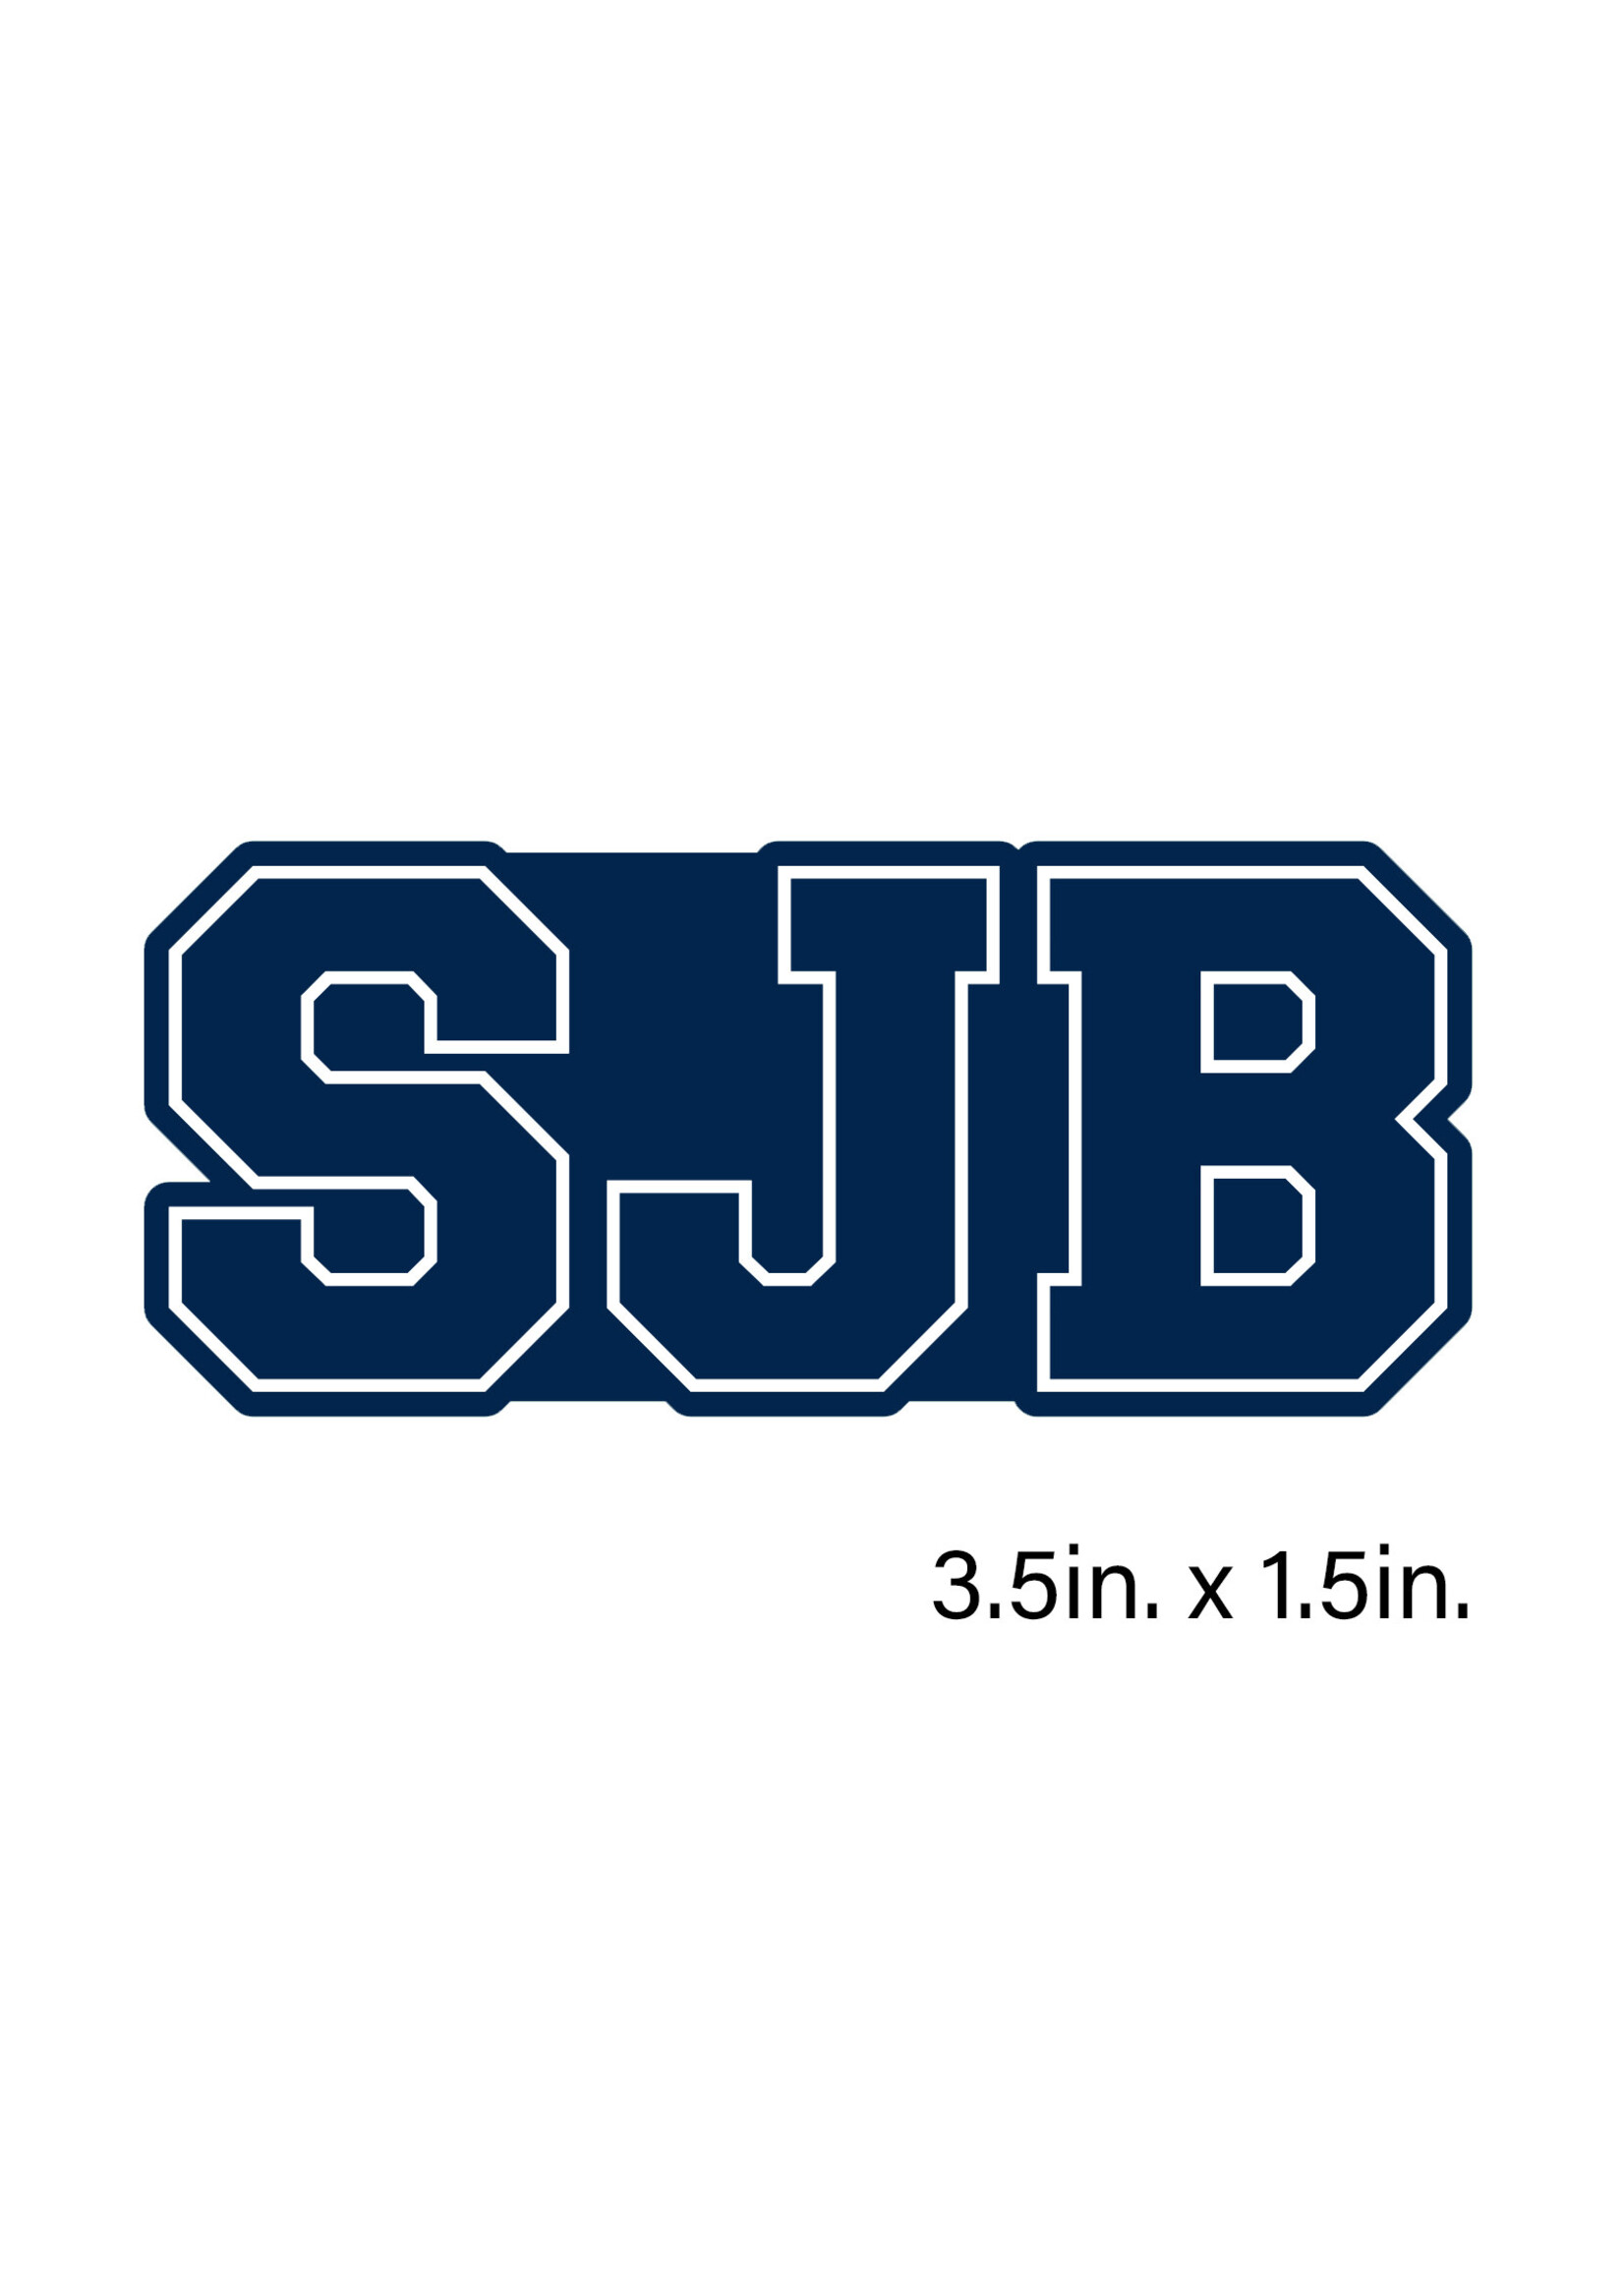 NON-UNIFORM SJB - Decal, SJB Design